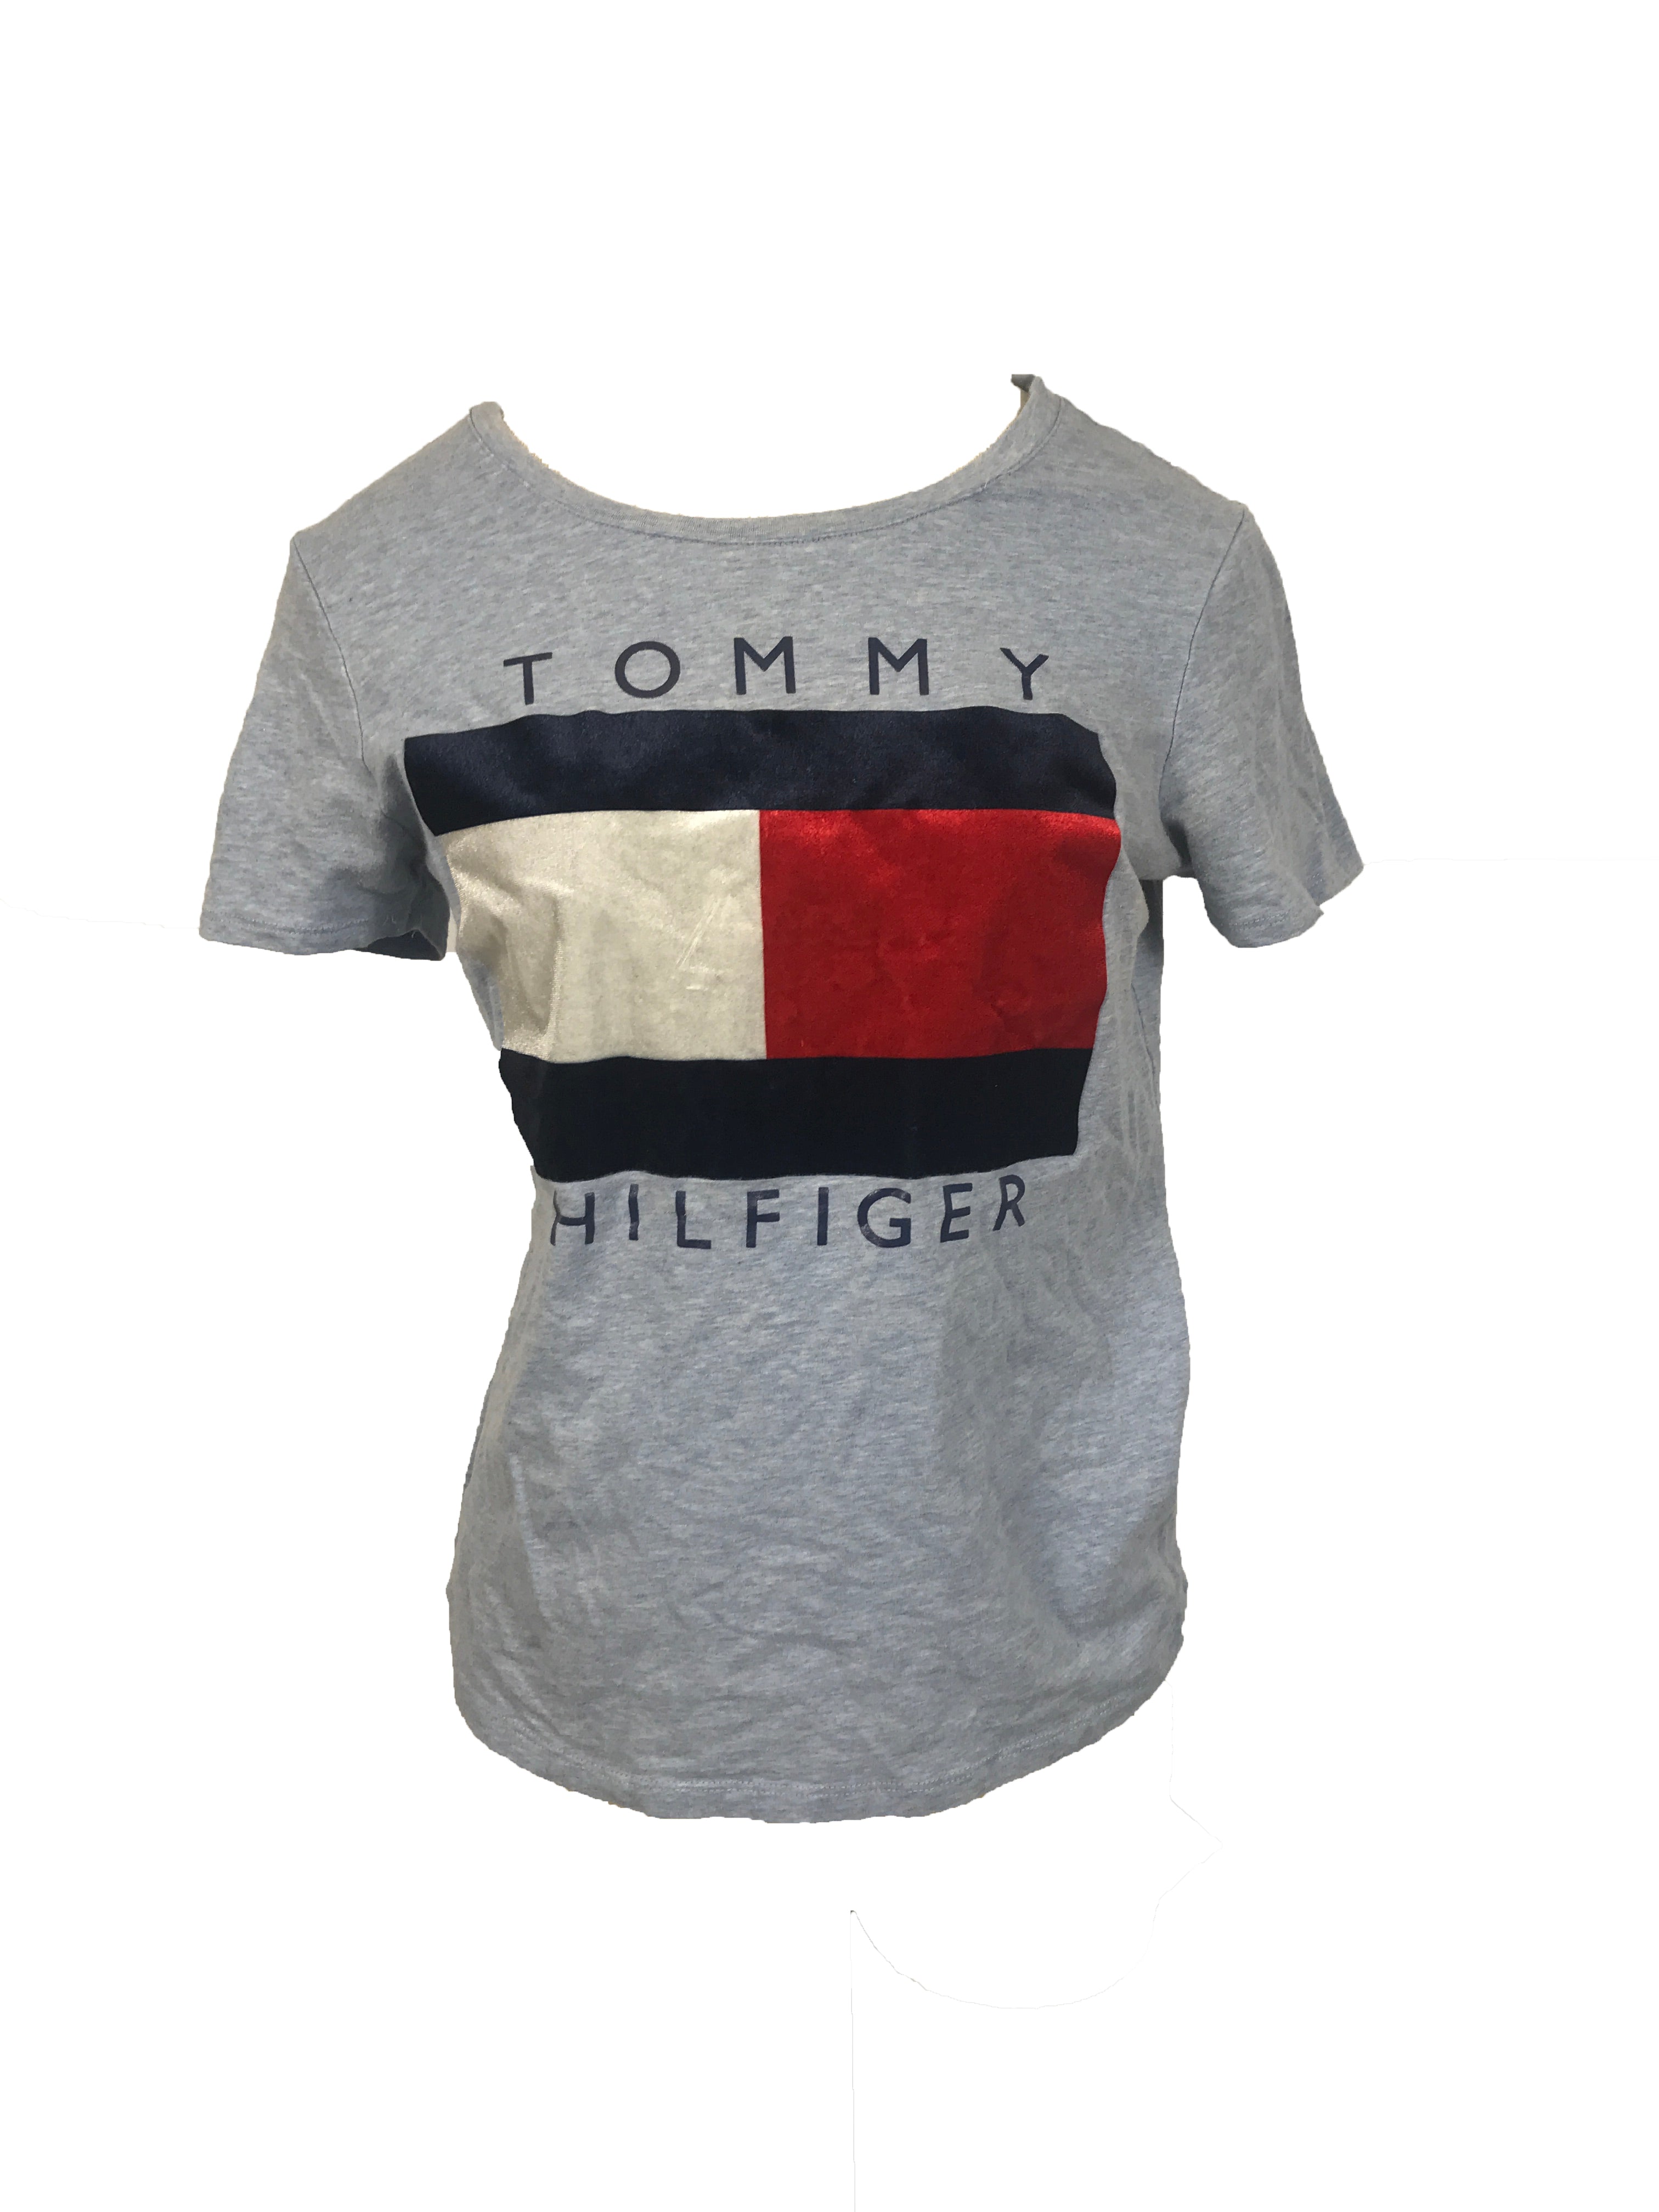 Tommy Hilfiger Light Blue T-Shirt Women's Size Small